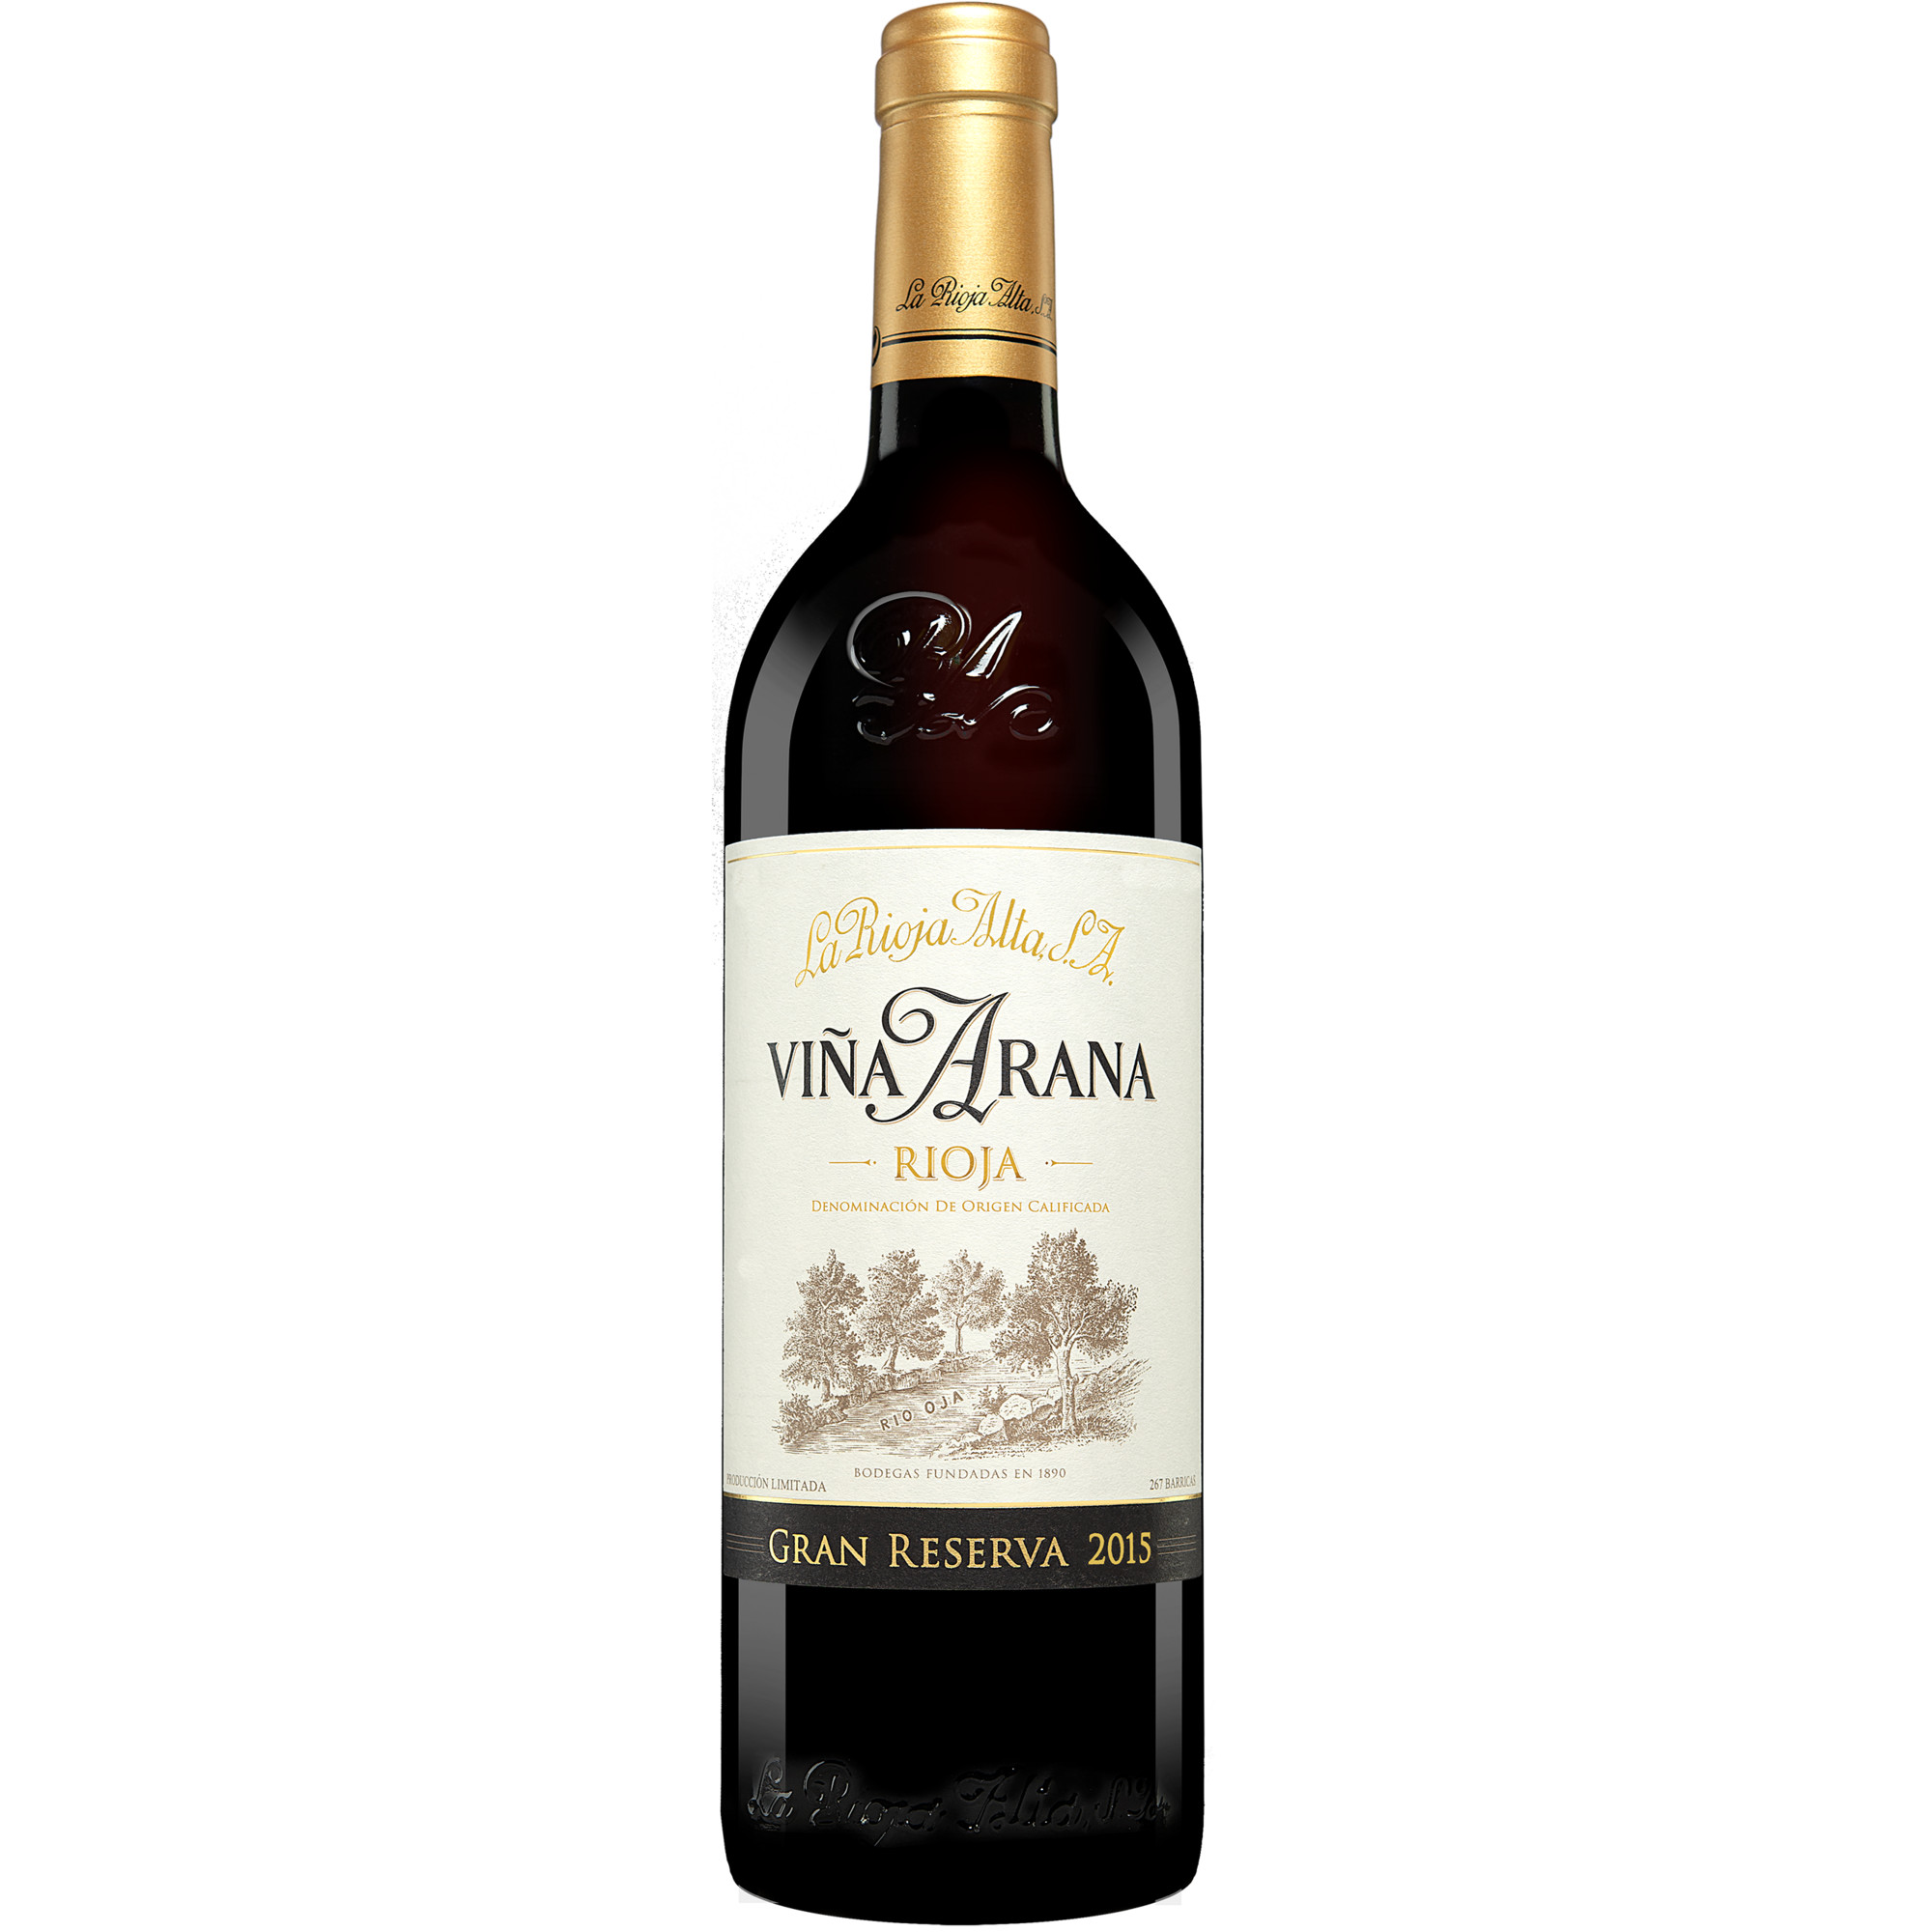 La Rioja Alta »Viña Arana« Gran Reserva 2015 Rotwein Trocken